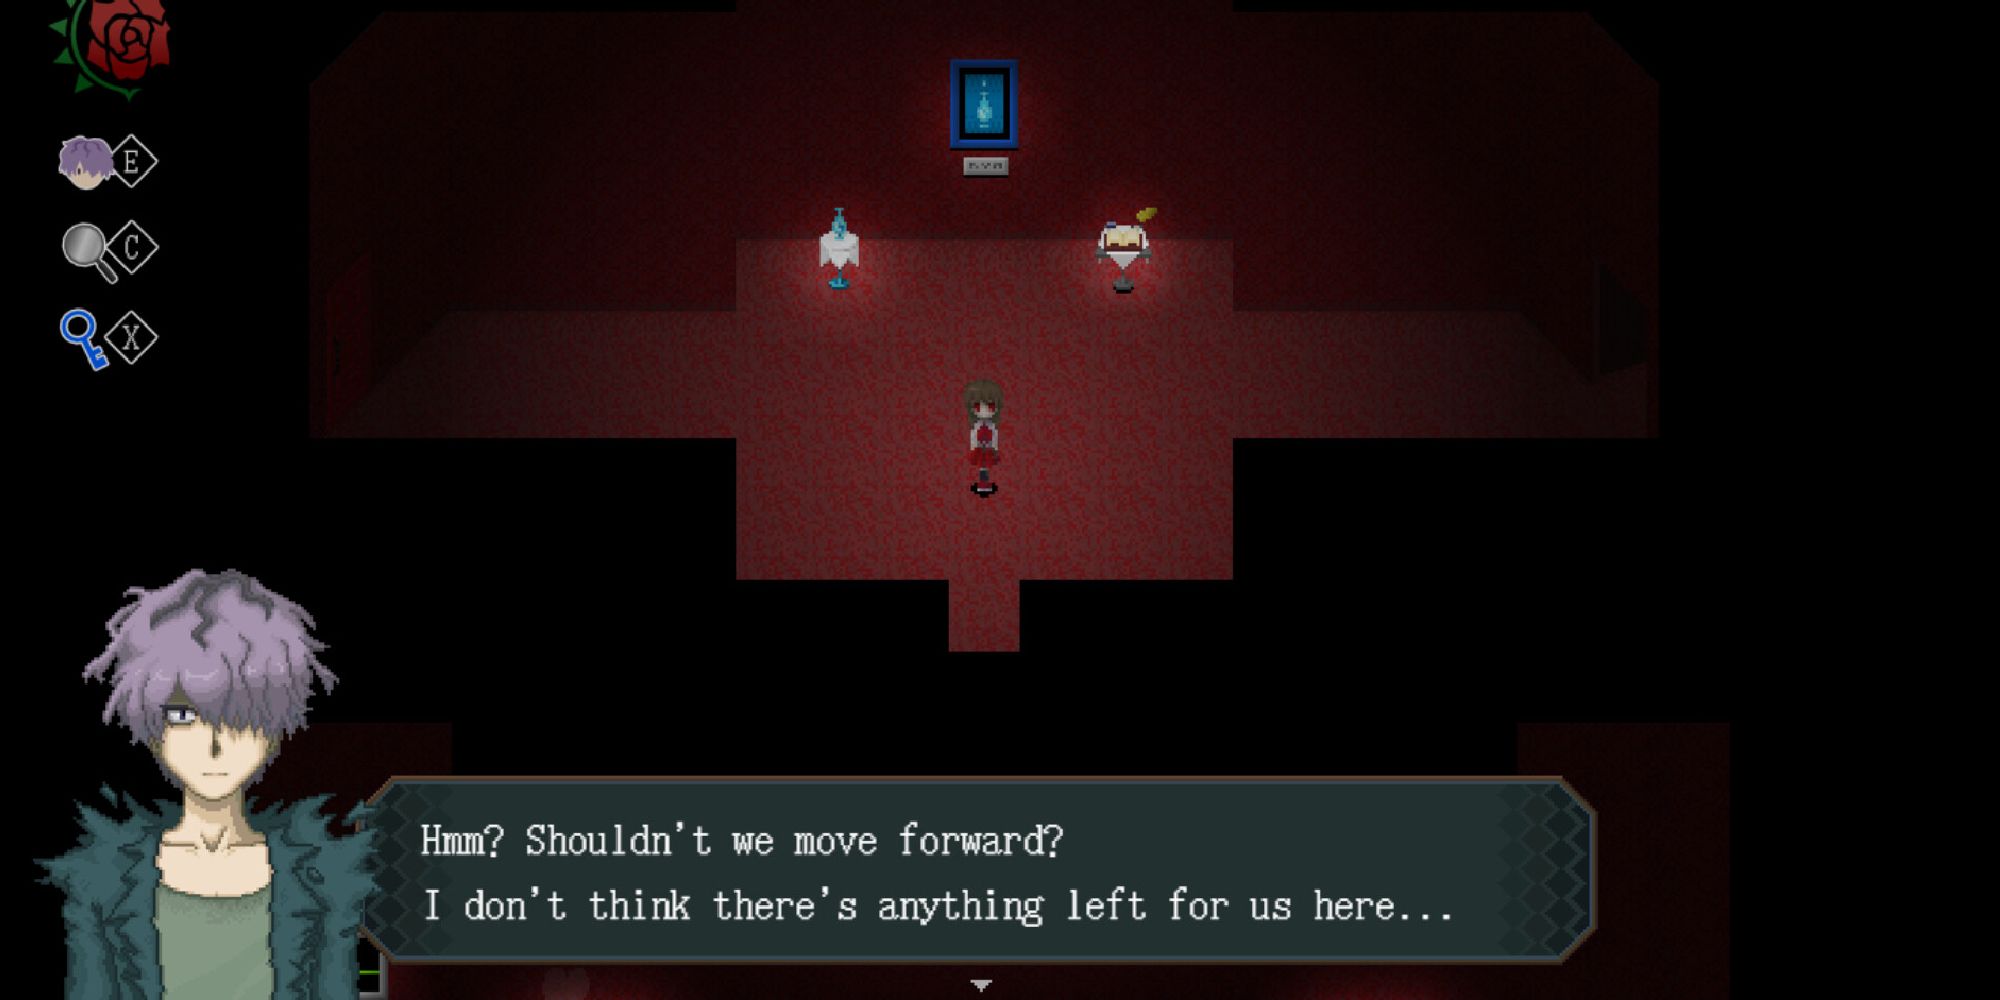 ib game dialogue in dark room